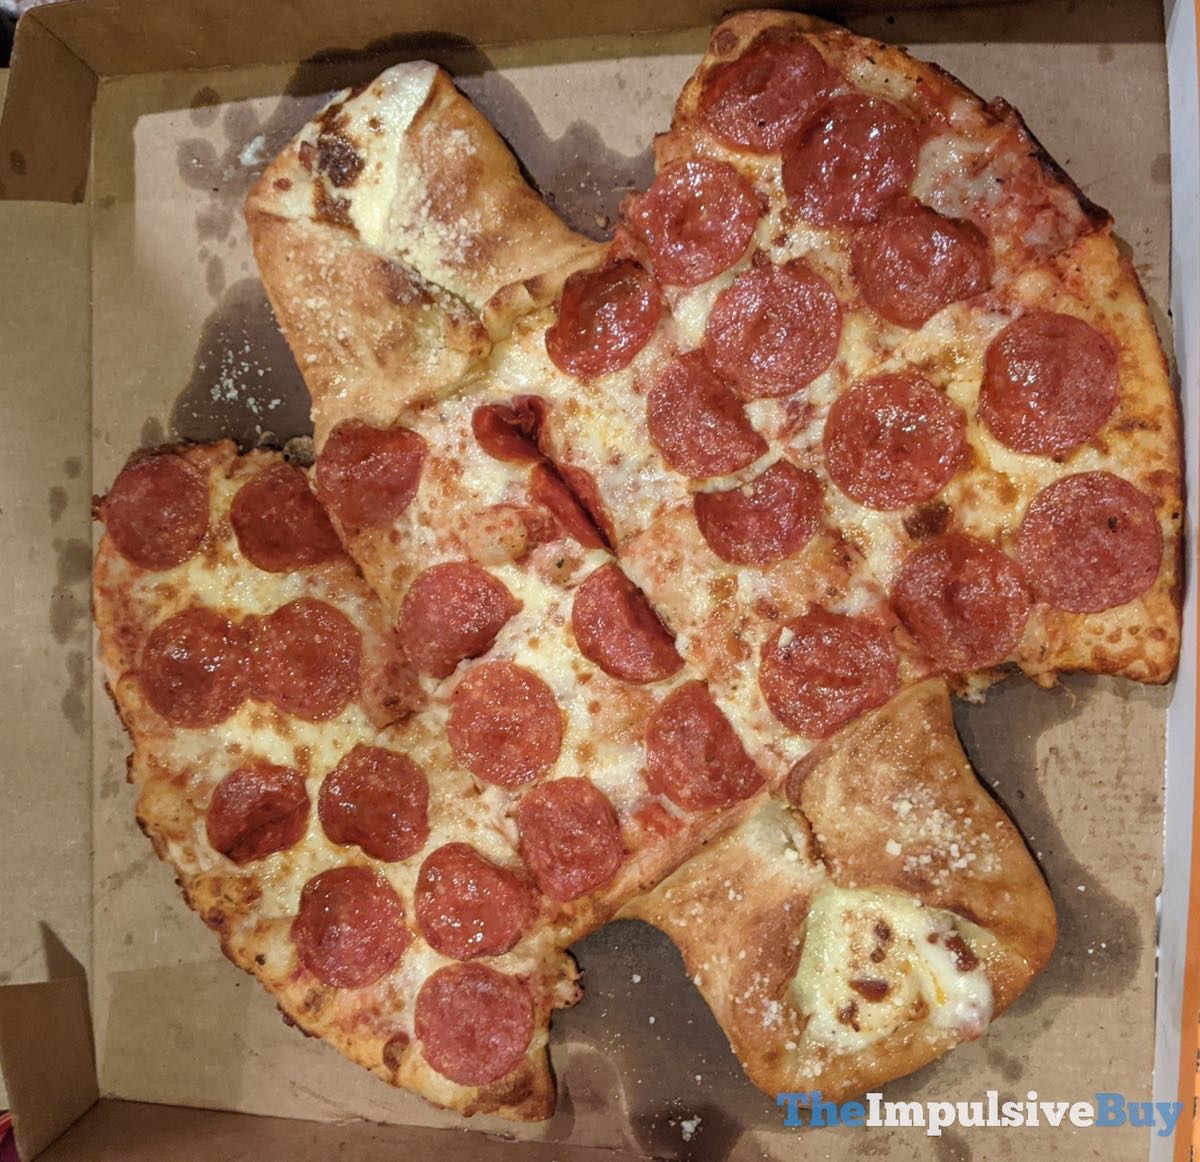 REVIEW: Little Caesars Stuffed Crazy Crust Pizza - The Impulsive Buy